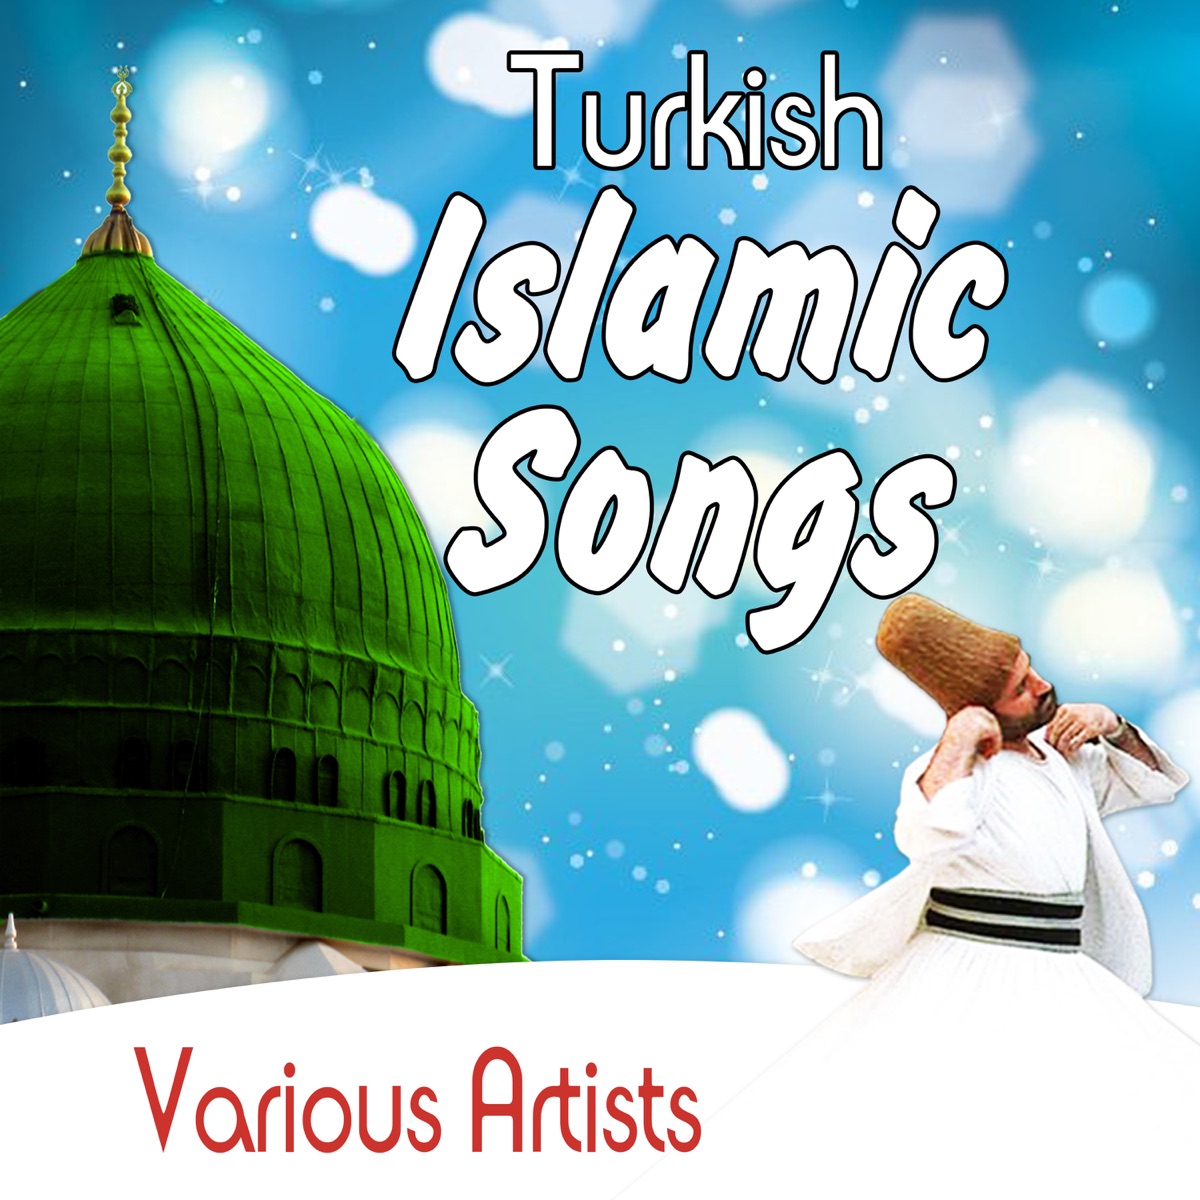 Turkish Islamic Songs - Album by Various Artists - Apple Music